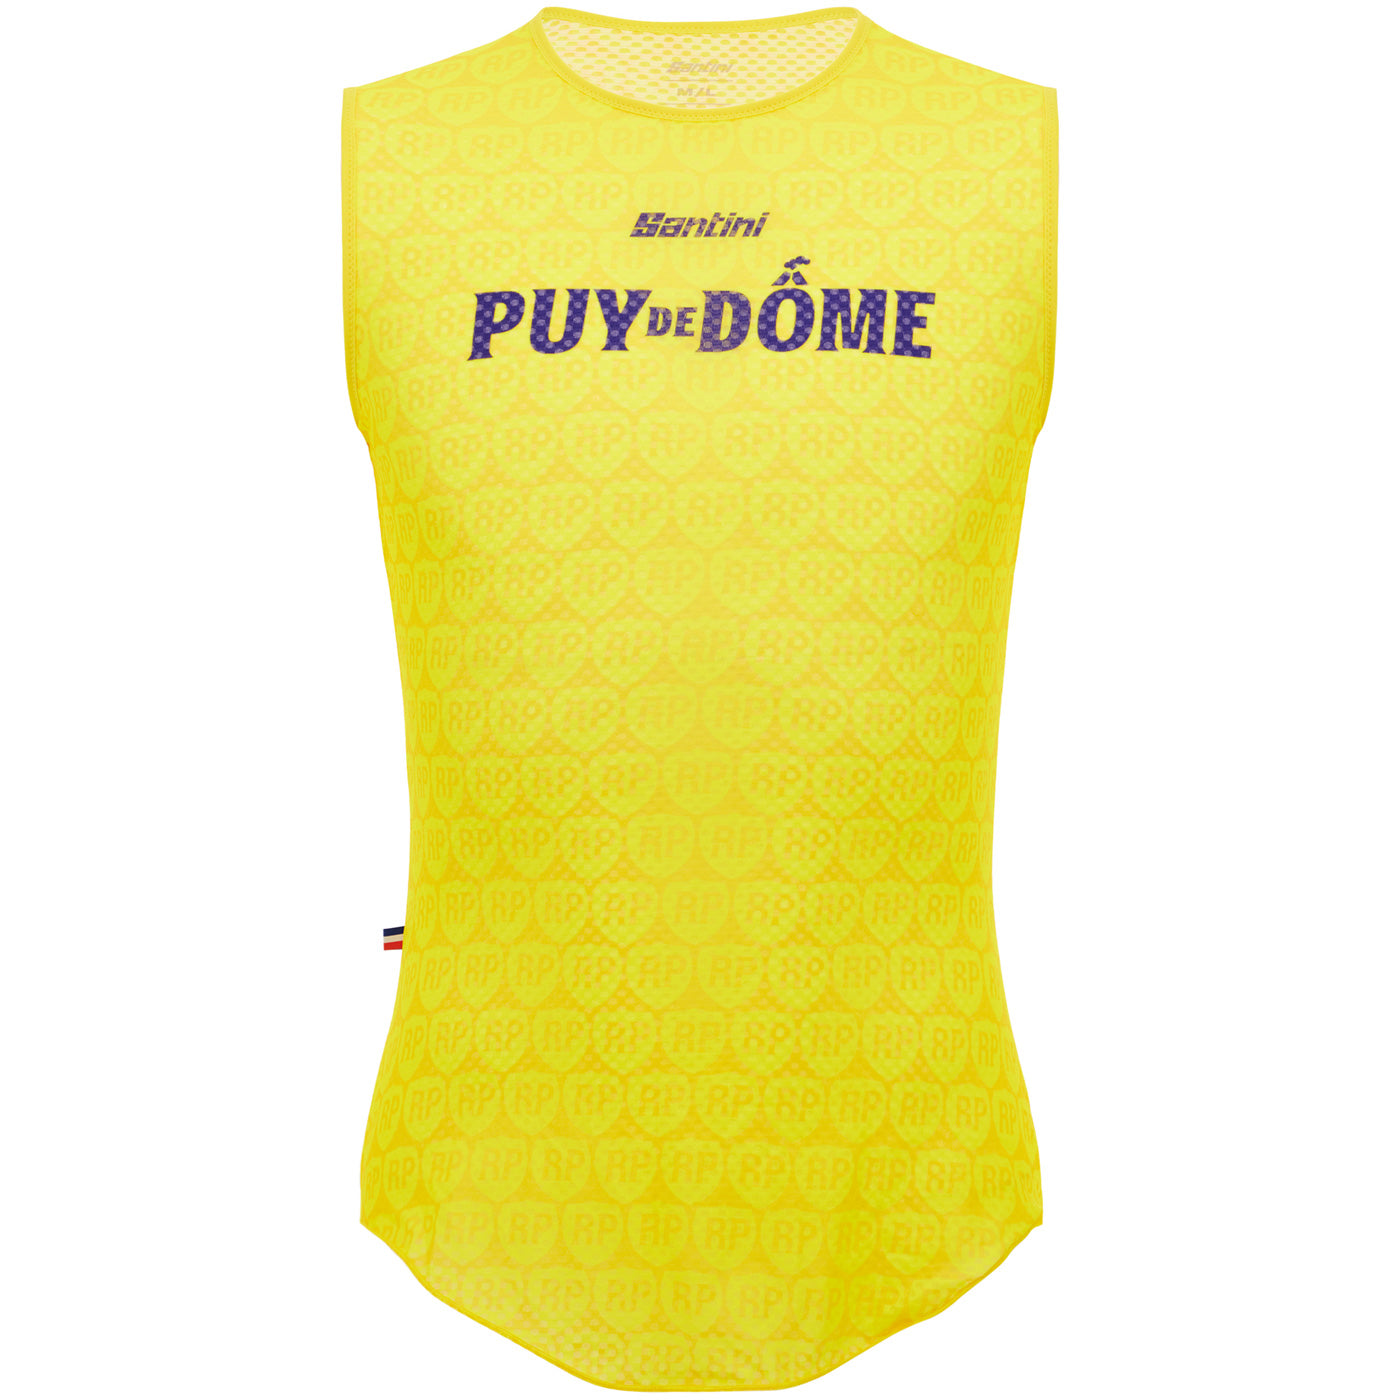 Tour de France armellose radunterhemd - Puy De Dome